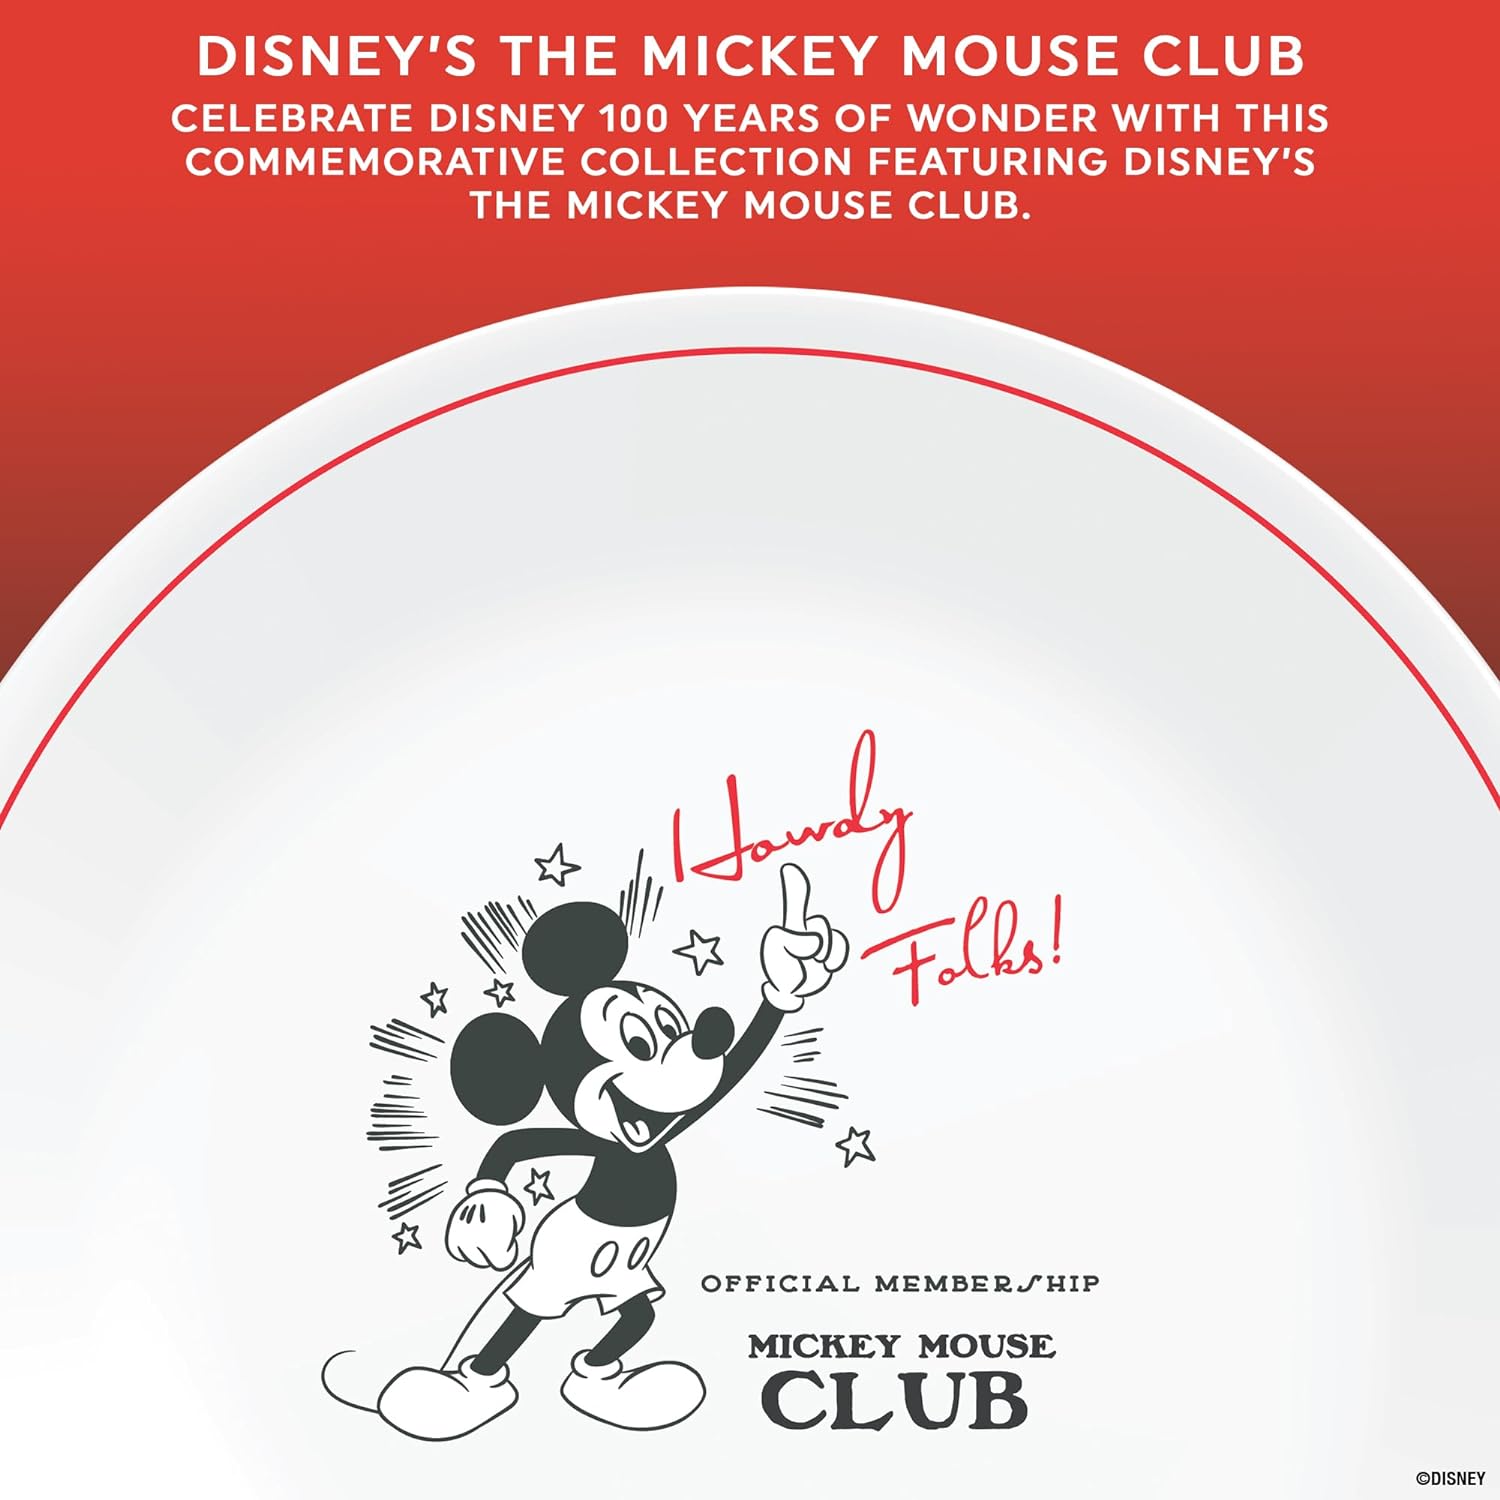 Corelle Vitrelle Micky-Mouse 12-PC Glass Dinnerware Set (Service for 4),  10.5 Dinner Plates, 8.5 Salad Plates, 16-Oz Soup Cereal Bowls-Disney  Commemorative Series